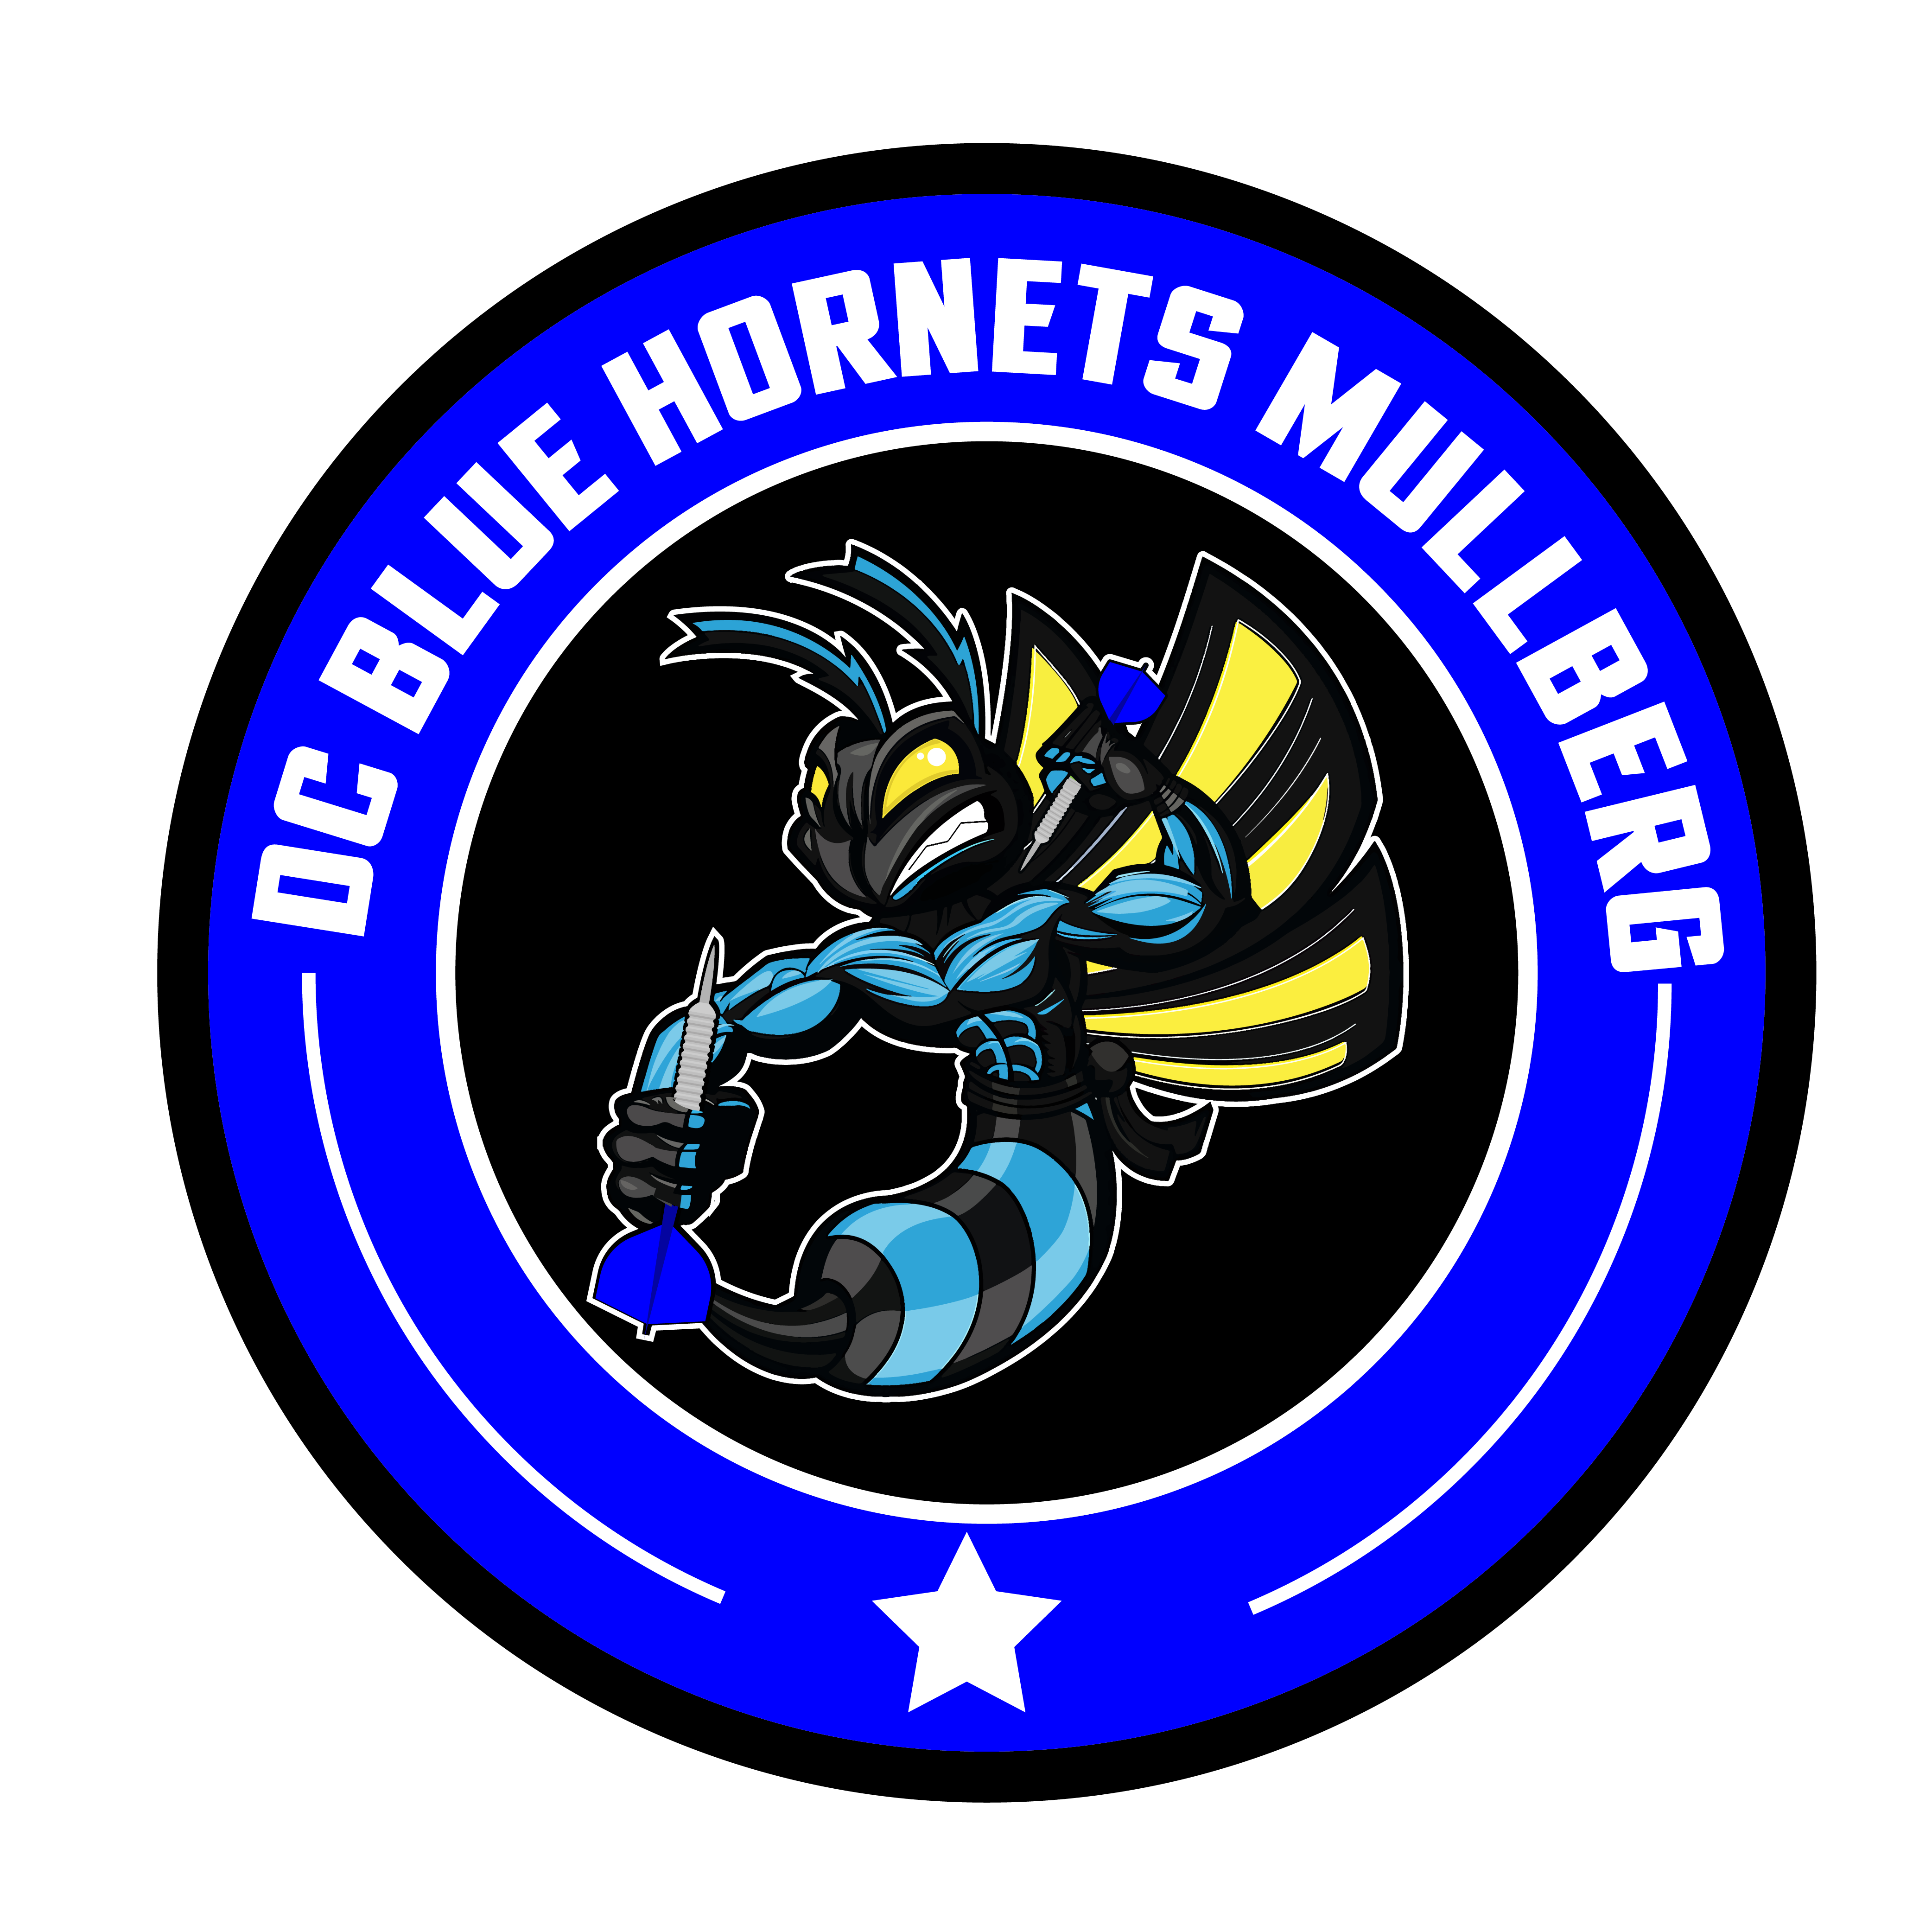 DC Blue Hornets Mullberg Teamshop